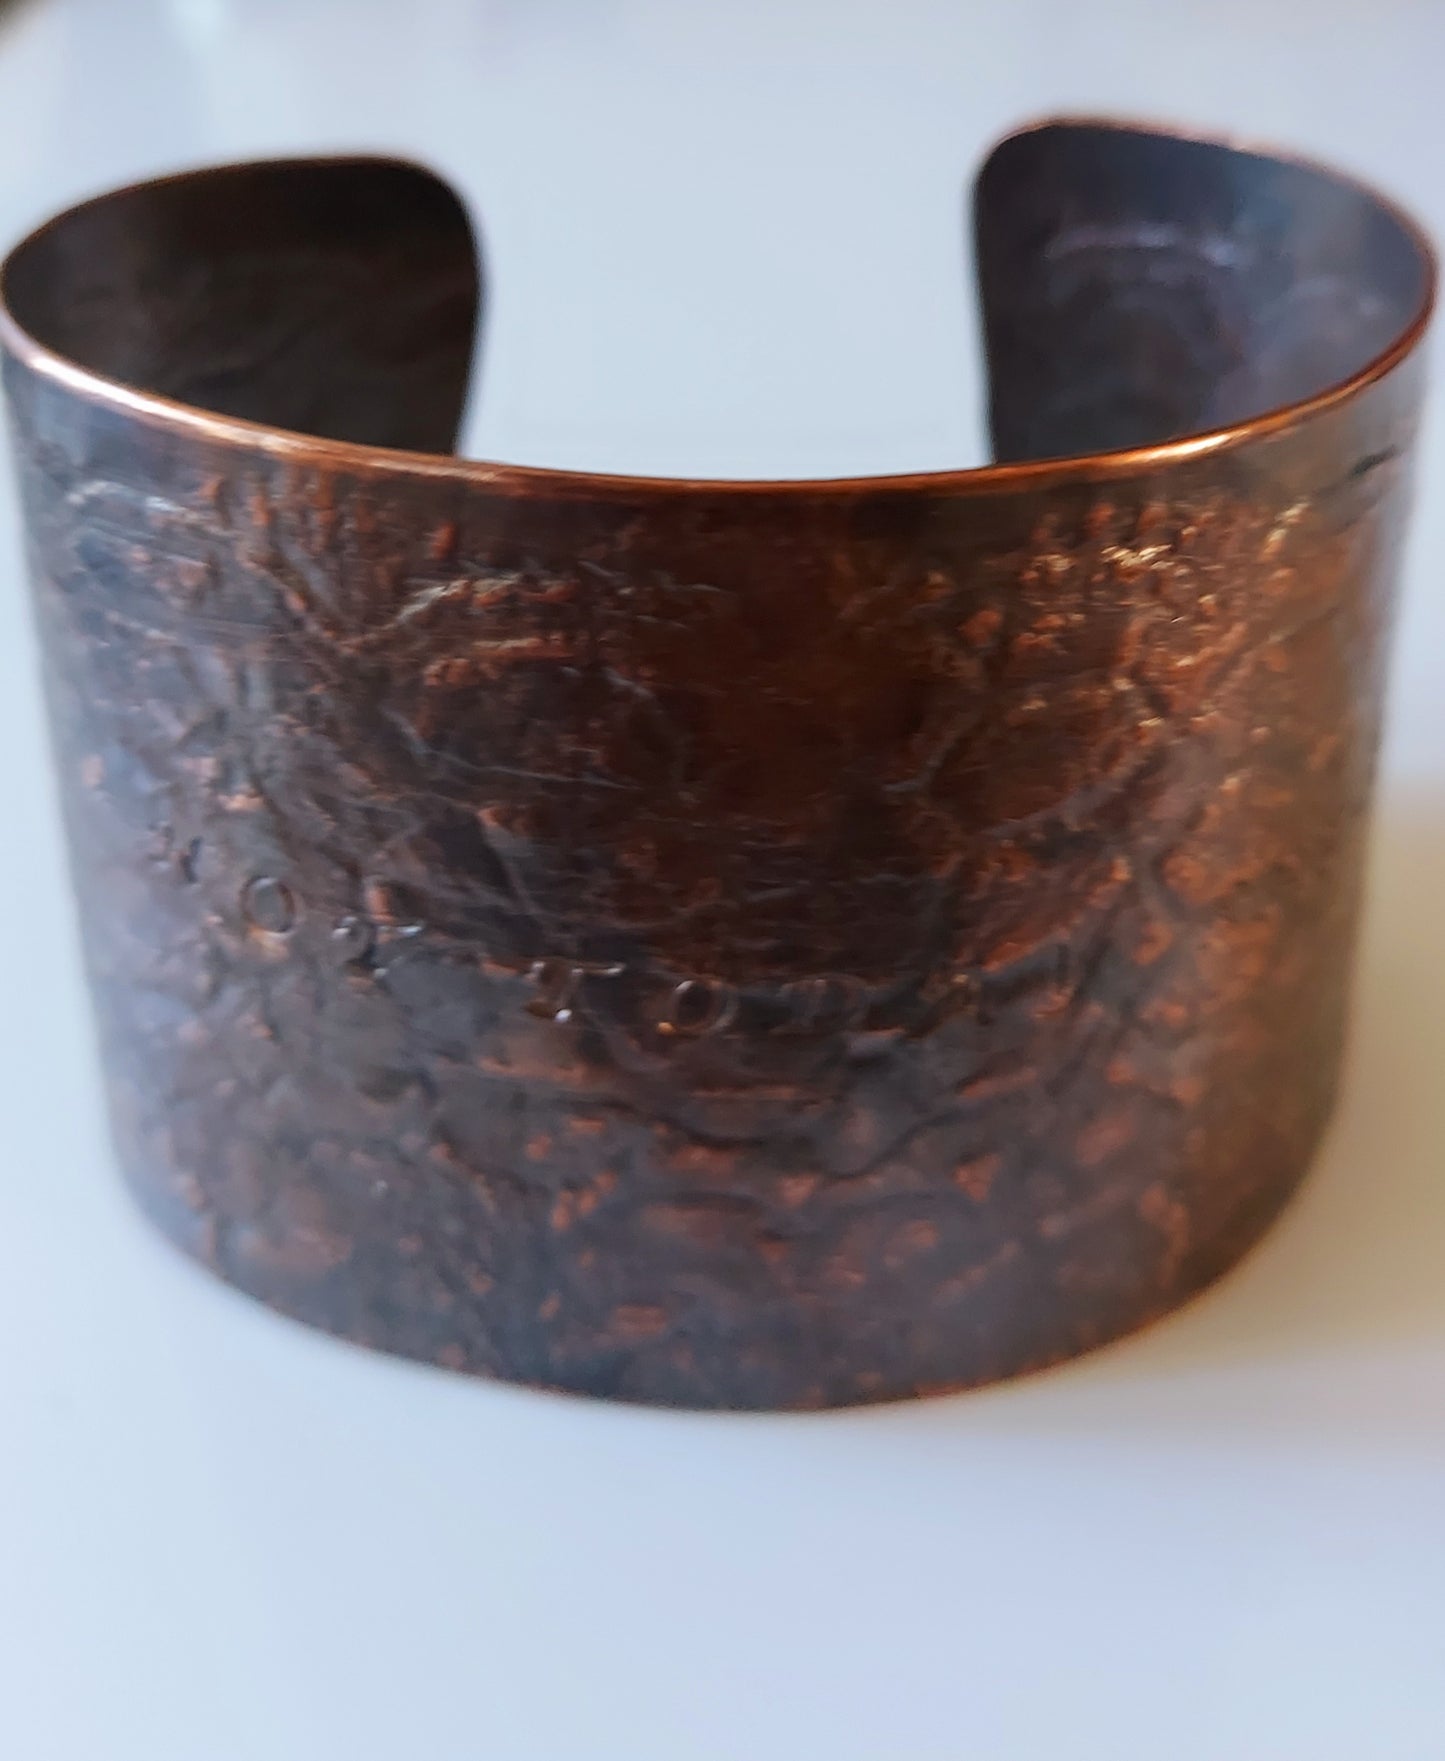 NTS Textured Copper Cuff